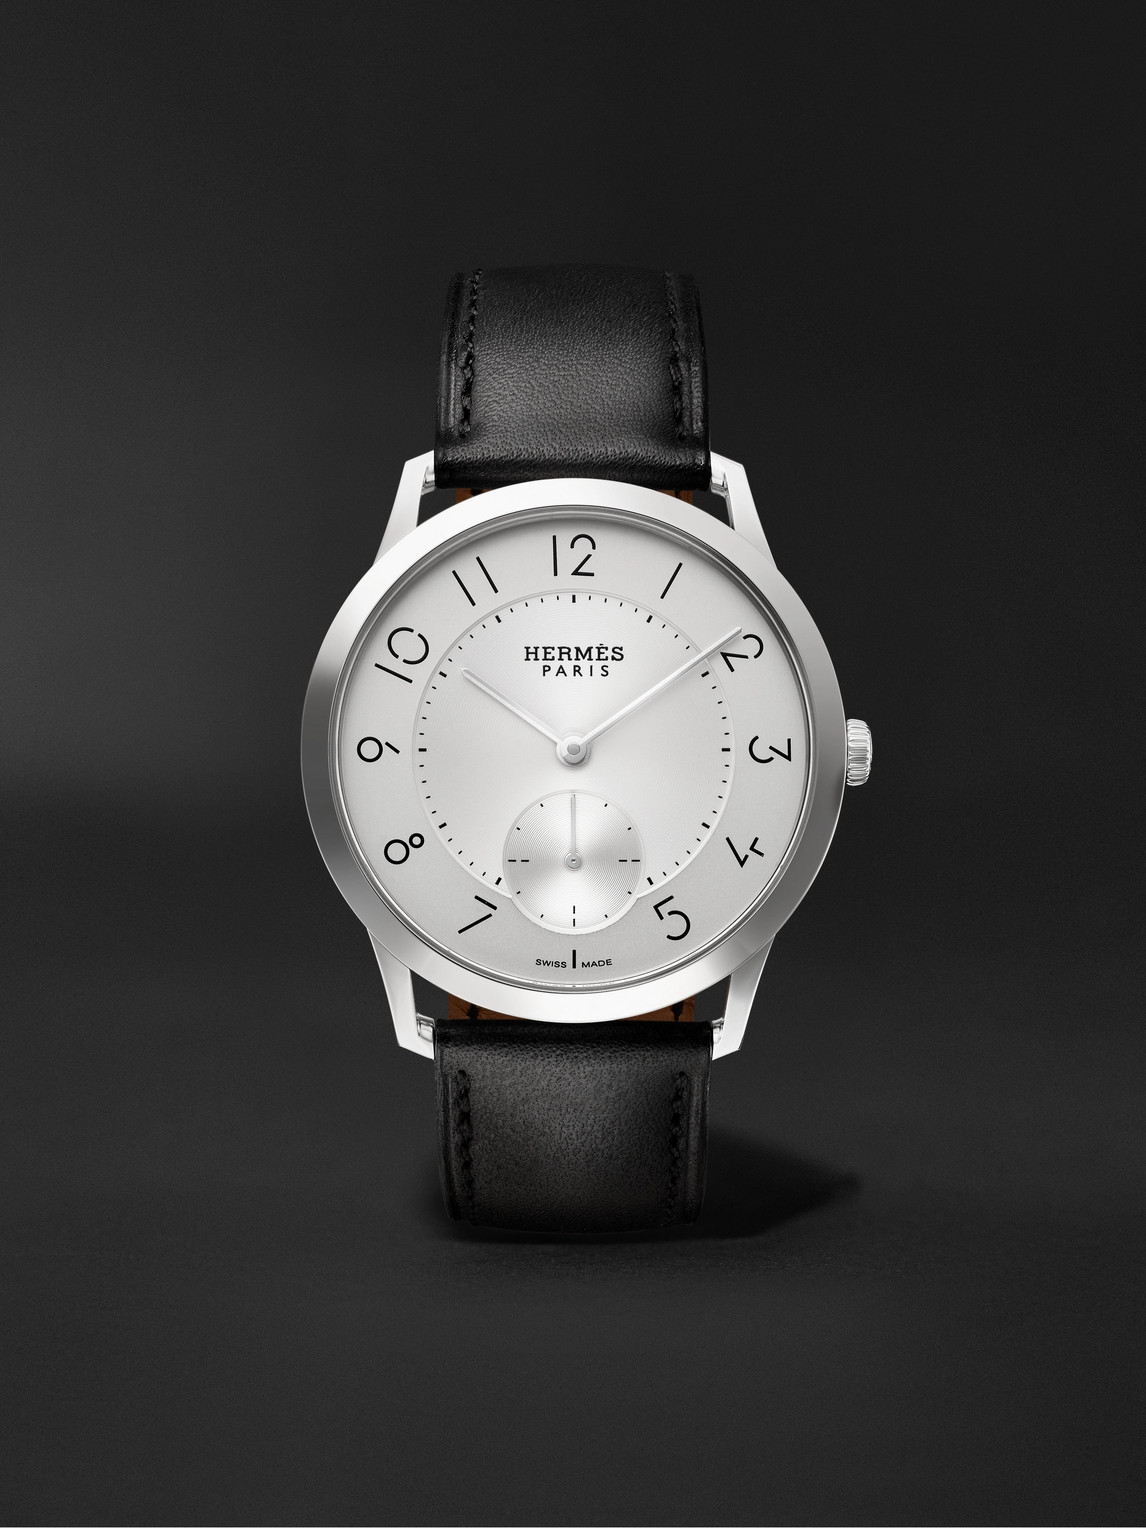 Hermès Timepieces Slim D'hermès Acier Automatic 39.5mm Stainless Steel And Leather Watch, Ref. No. 052839ww00 In Black